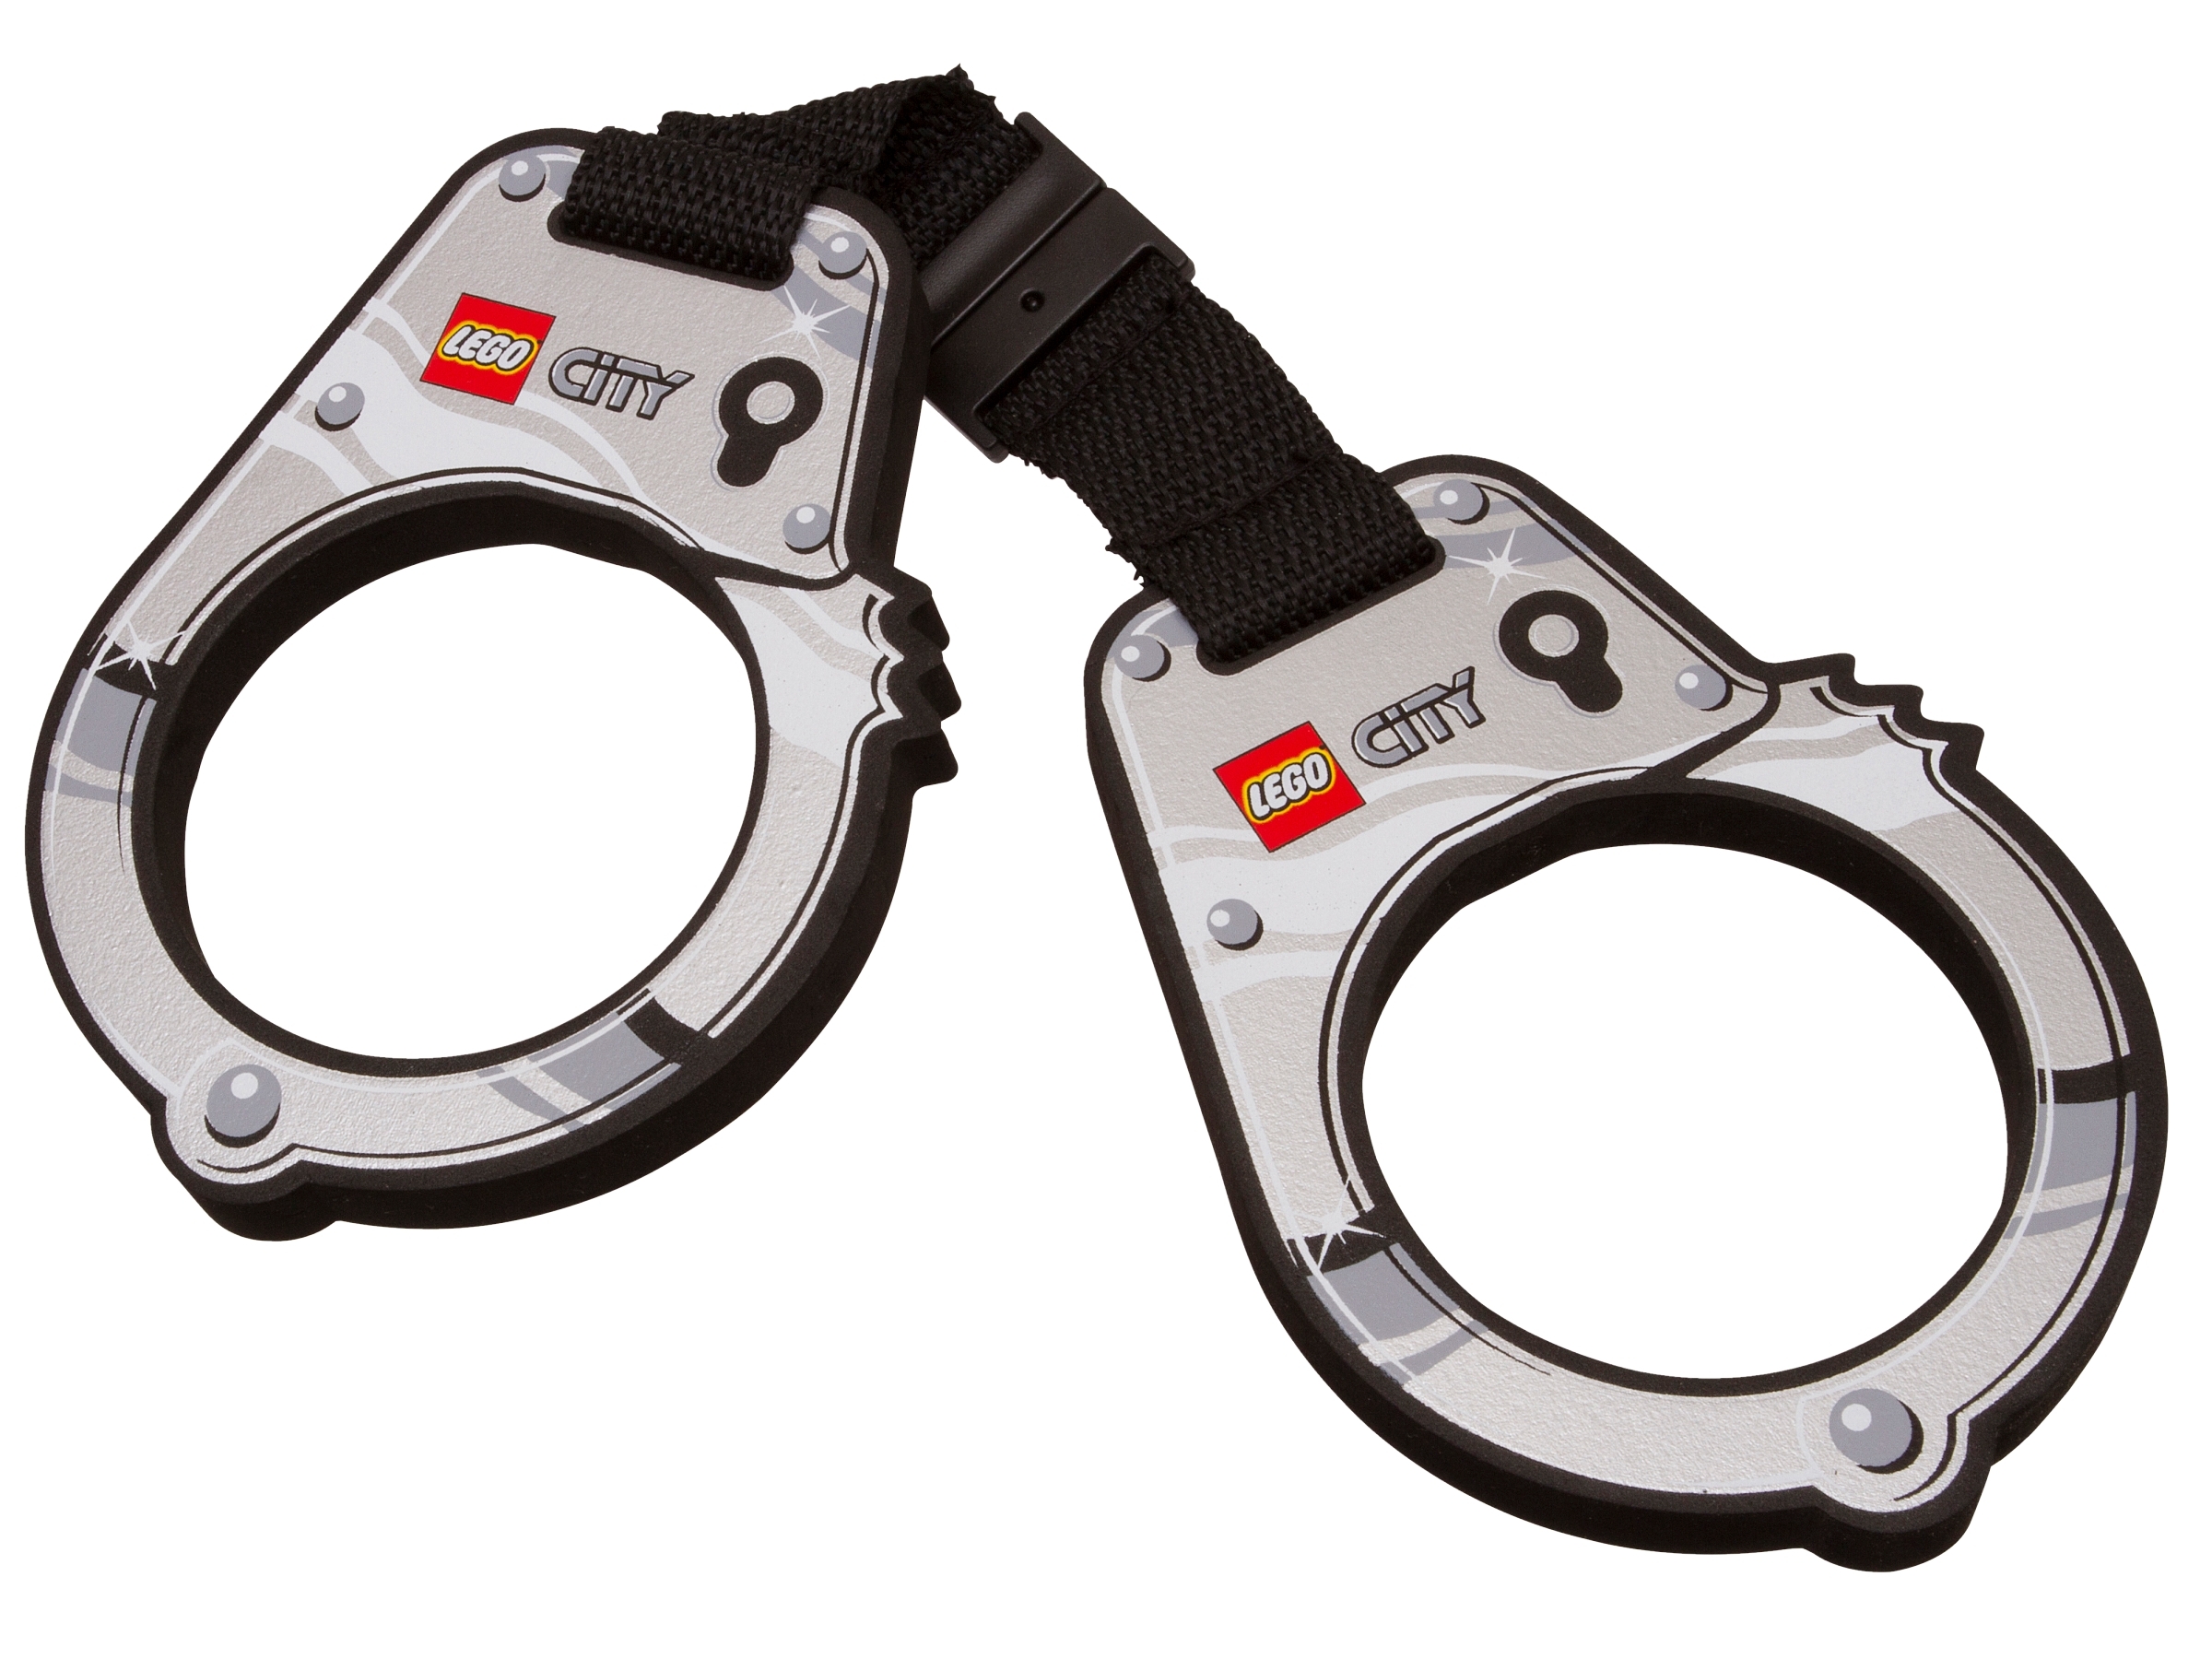 Detail Pics Of Handcuffs Nomer 22